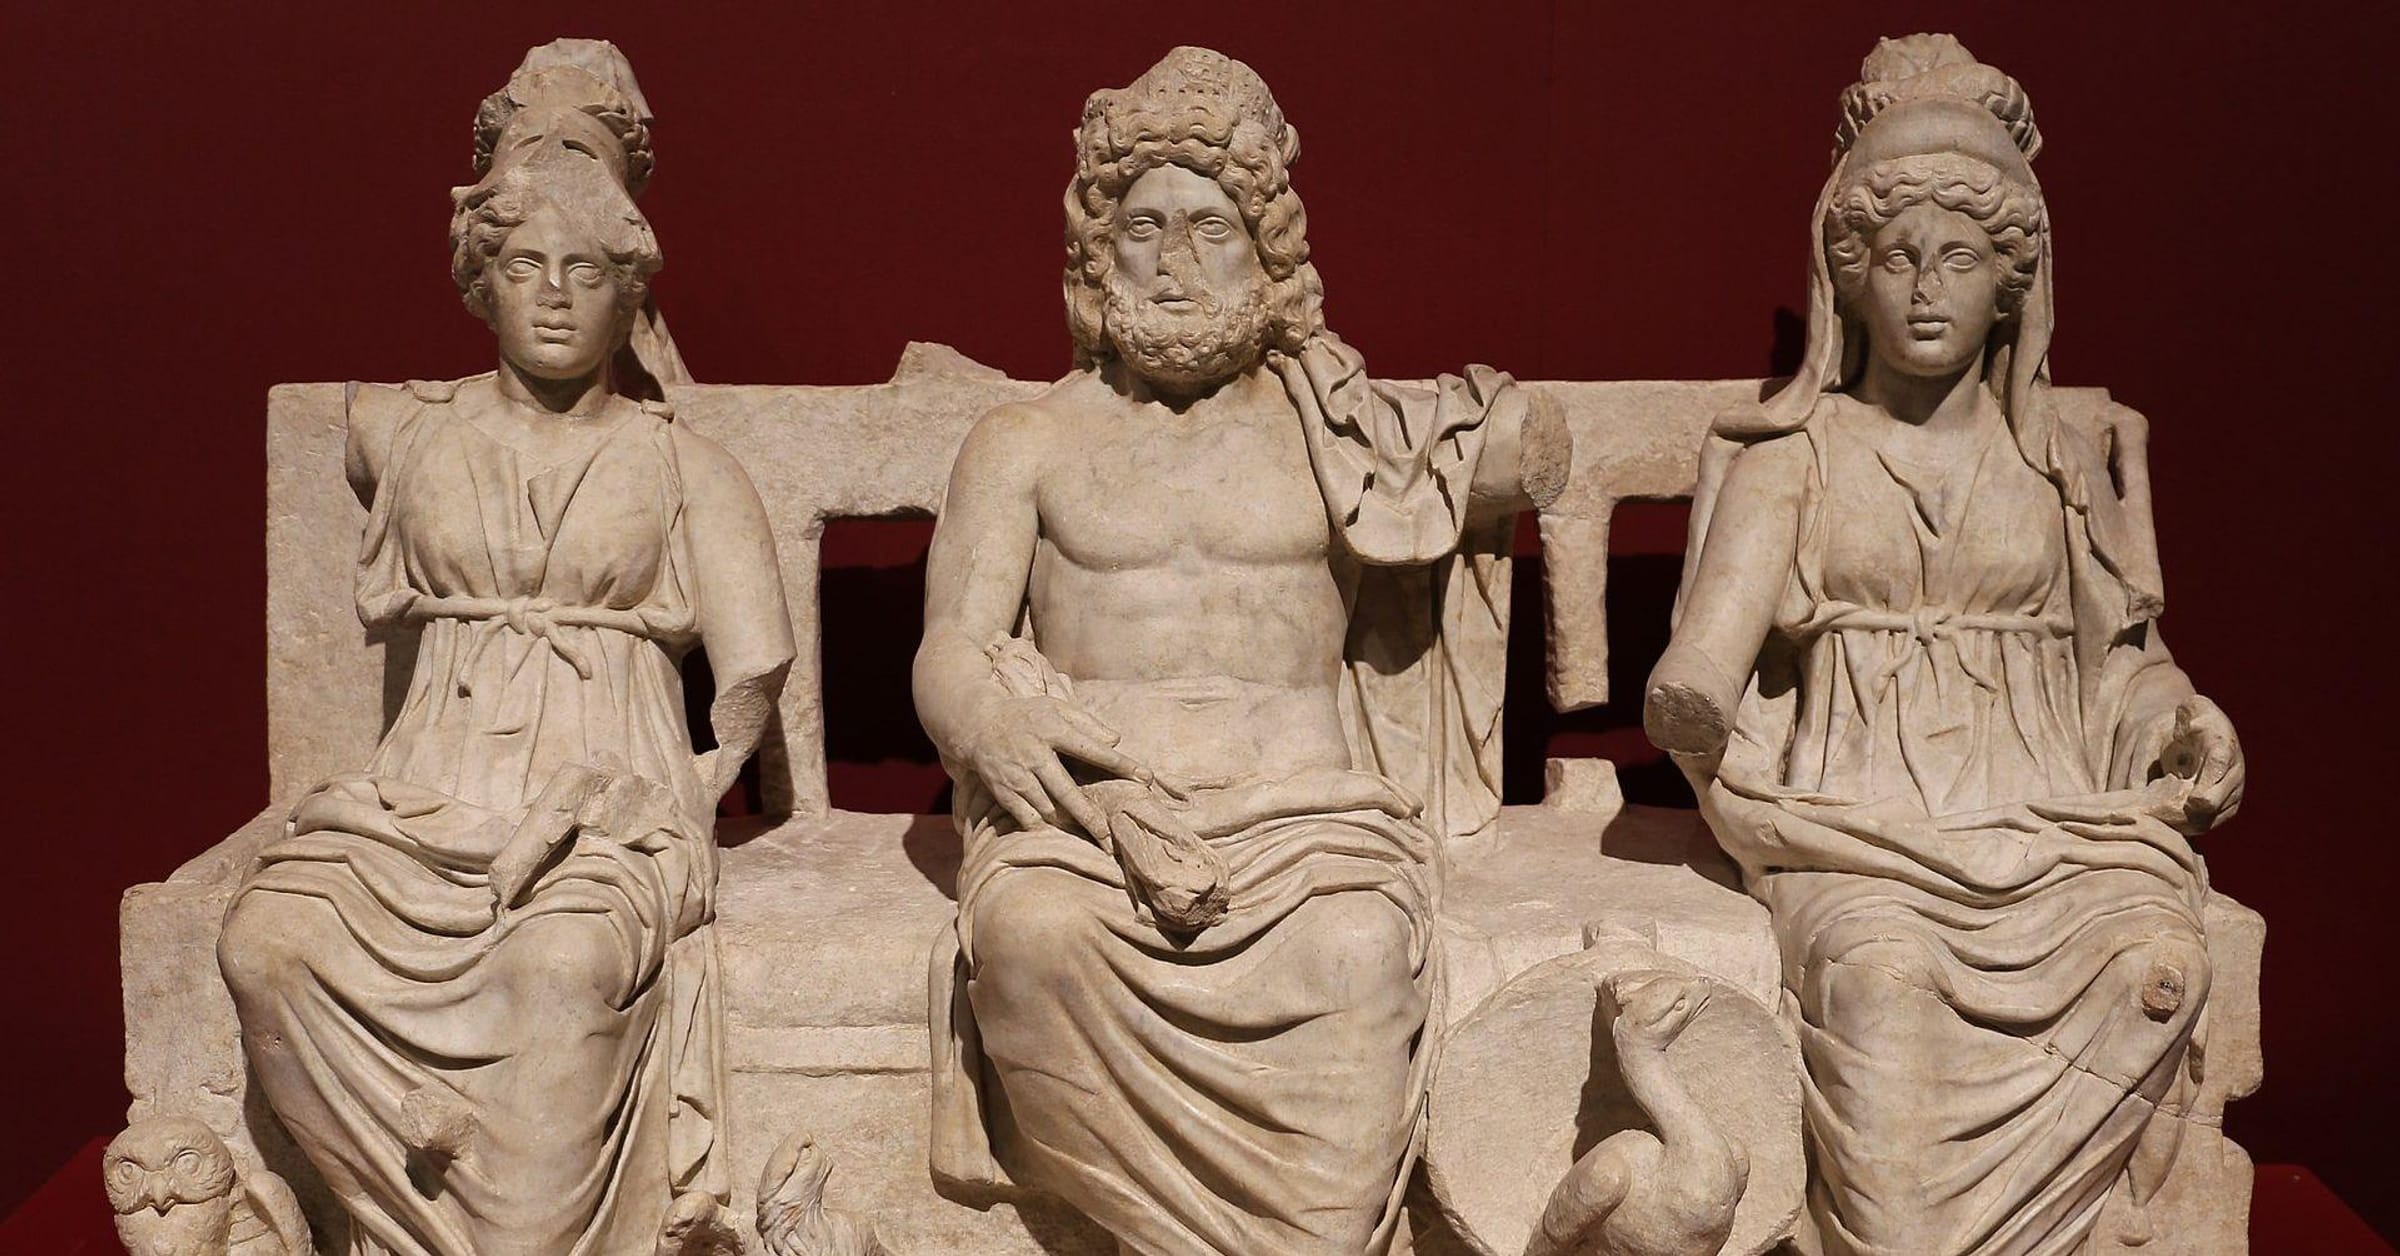 roman gods